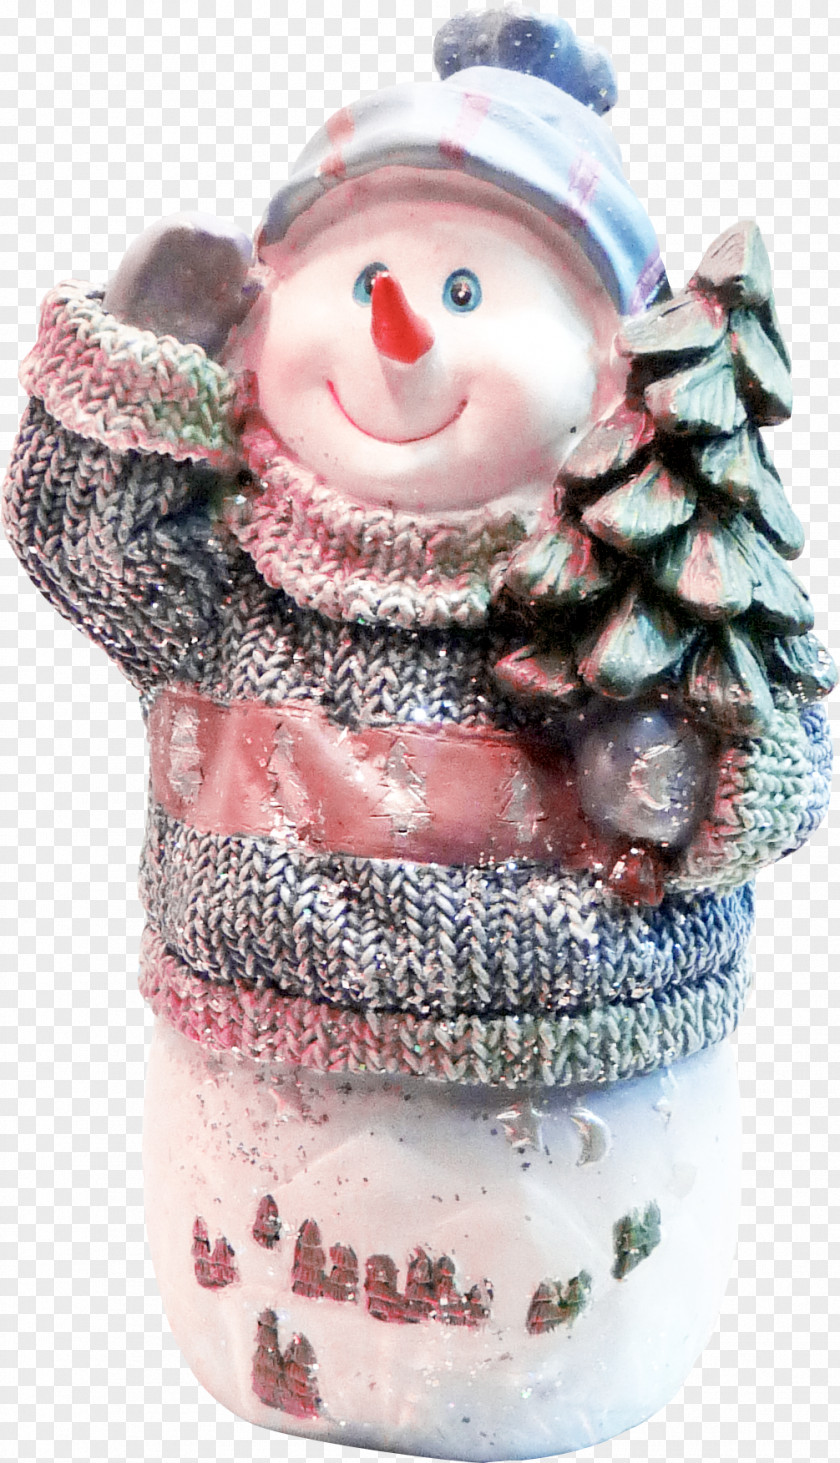 Pretty Creative Snowman Christmas PNG